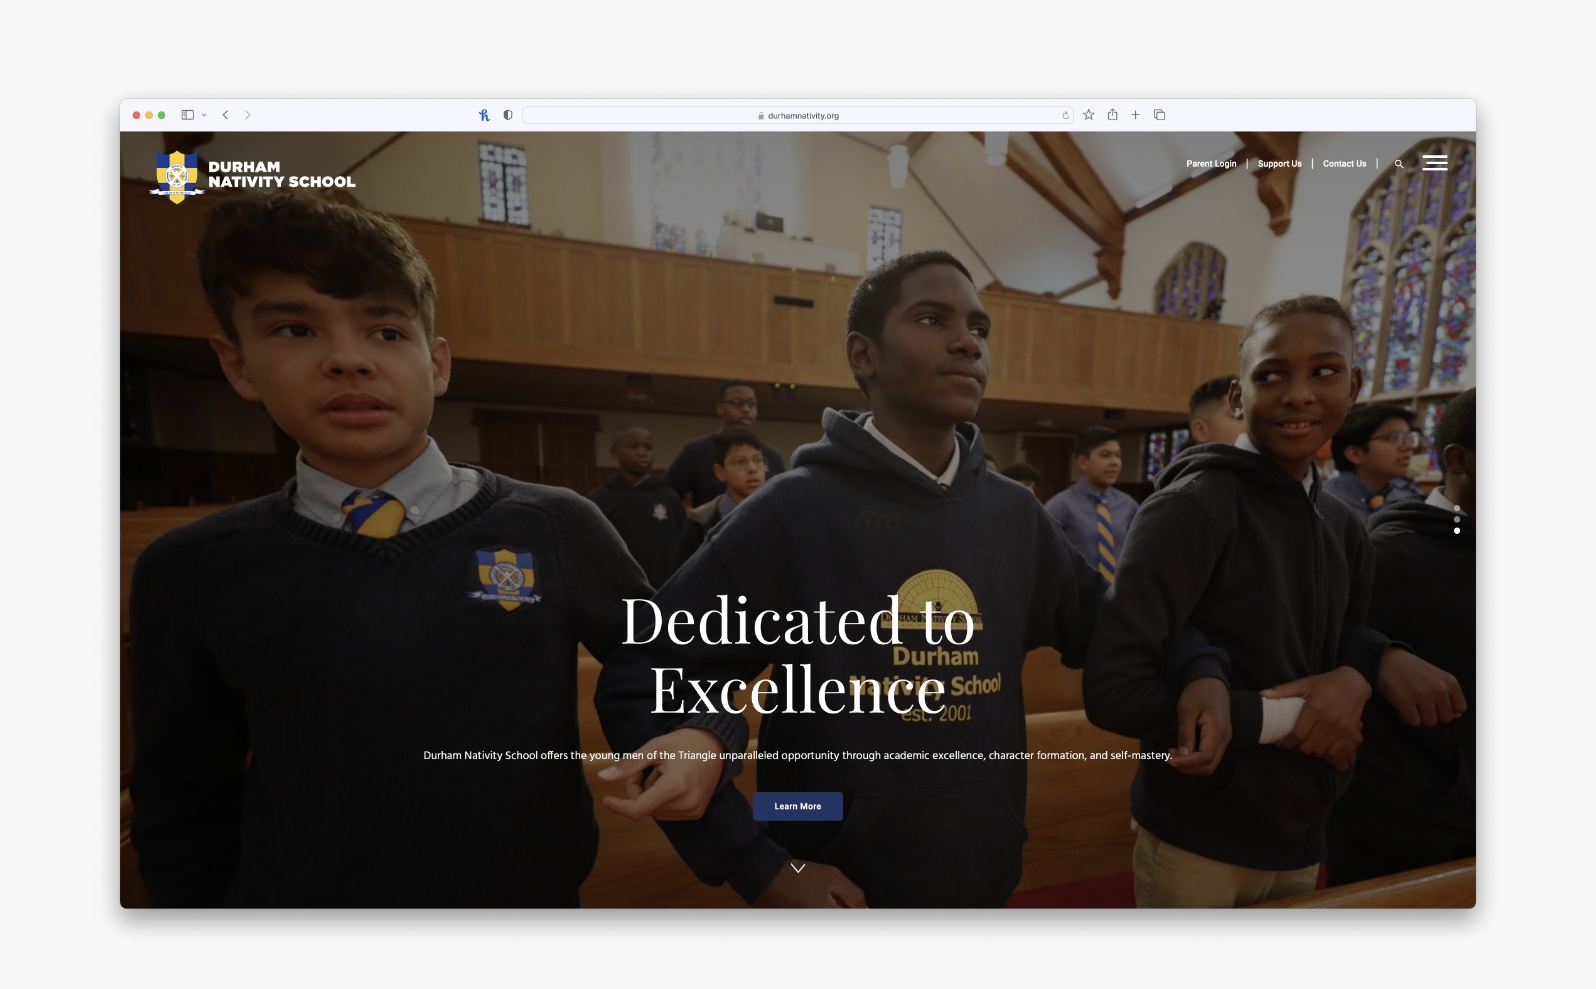 Durham Nativity School Launches New Website